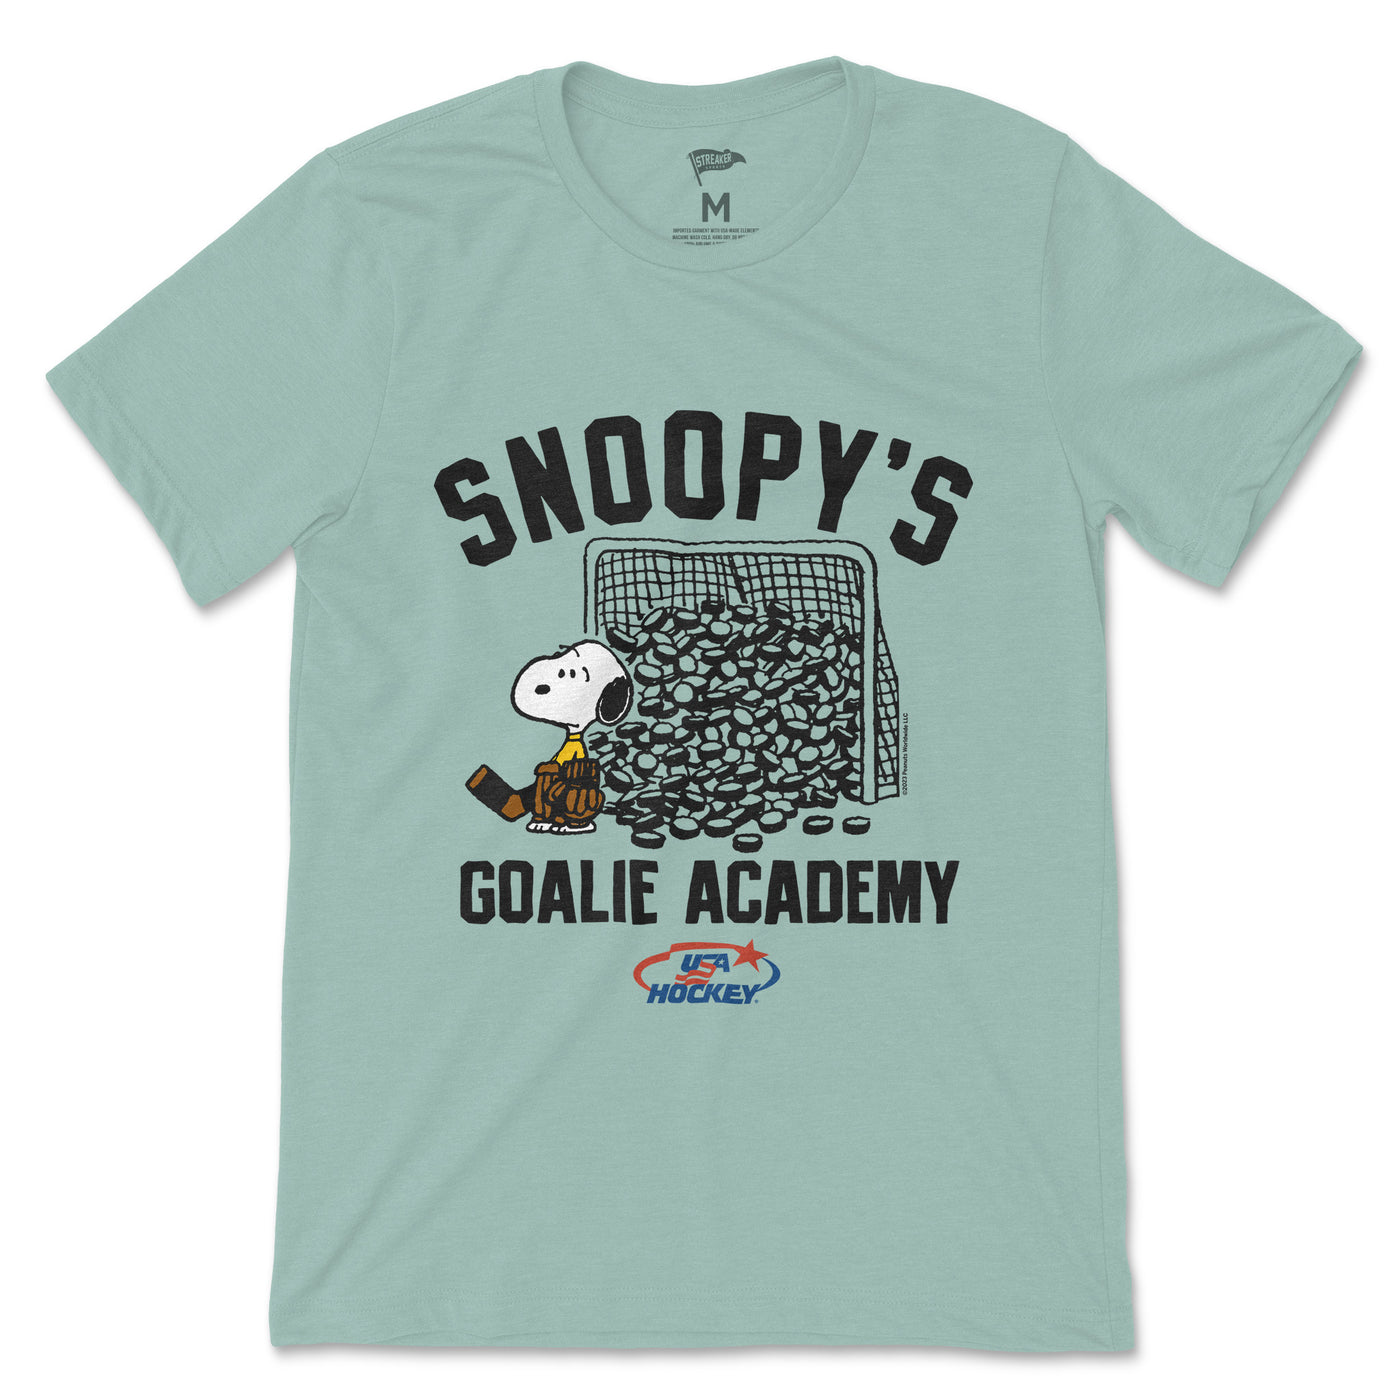 Peanuts x USA Hockey Snoopy's Goalie Academy Tee - Streaker Sports